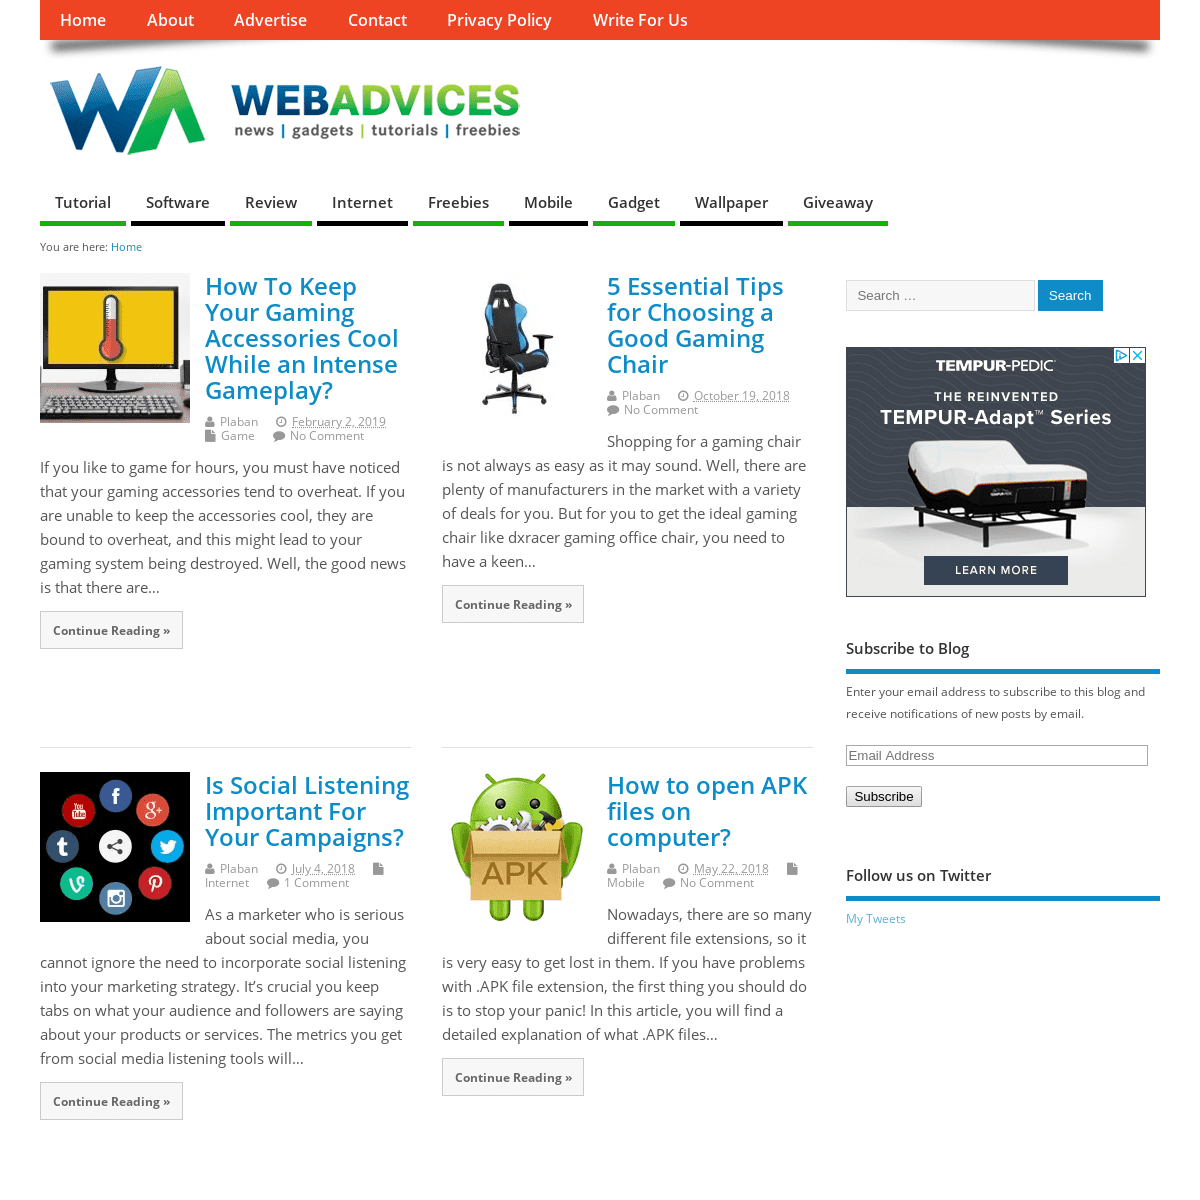 A complete backup of webadvices.com